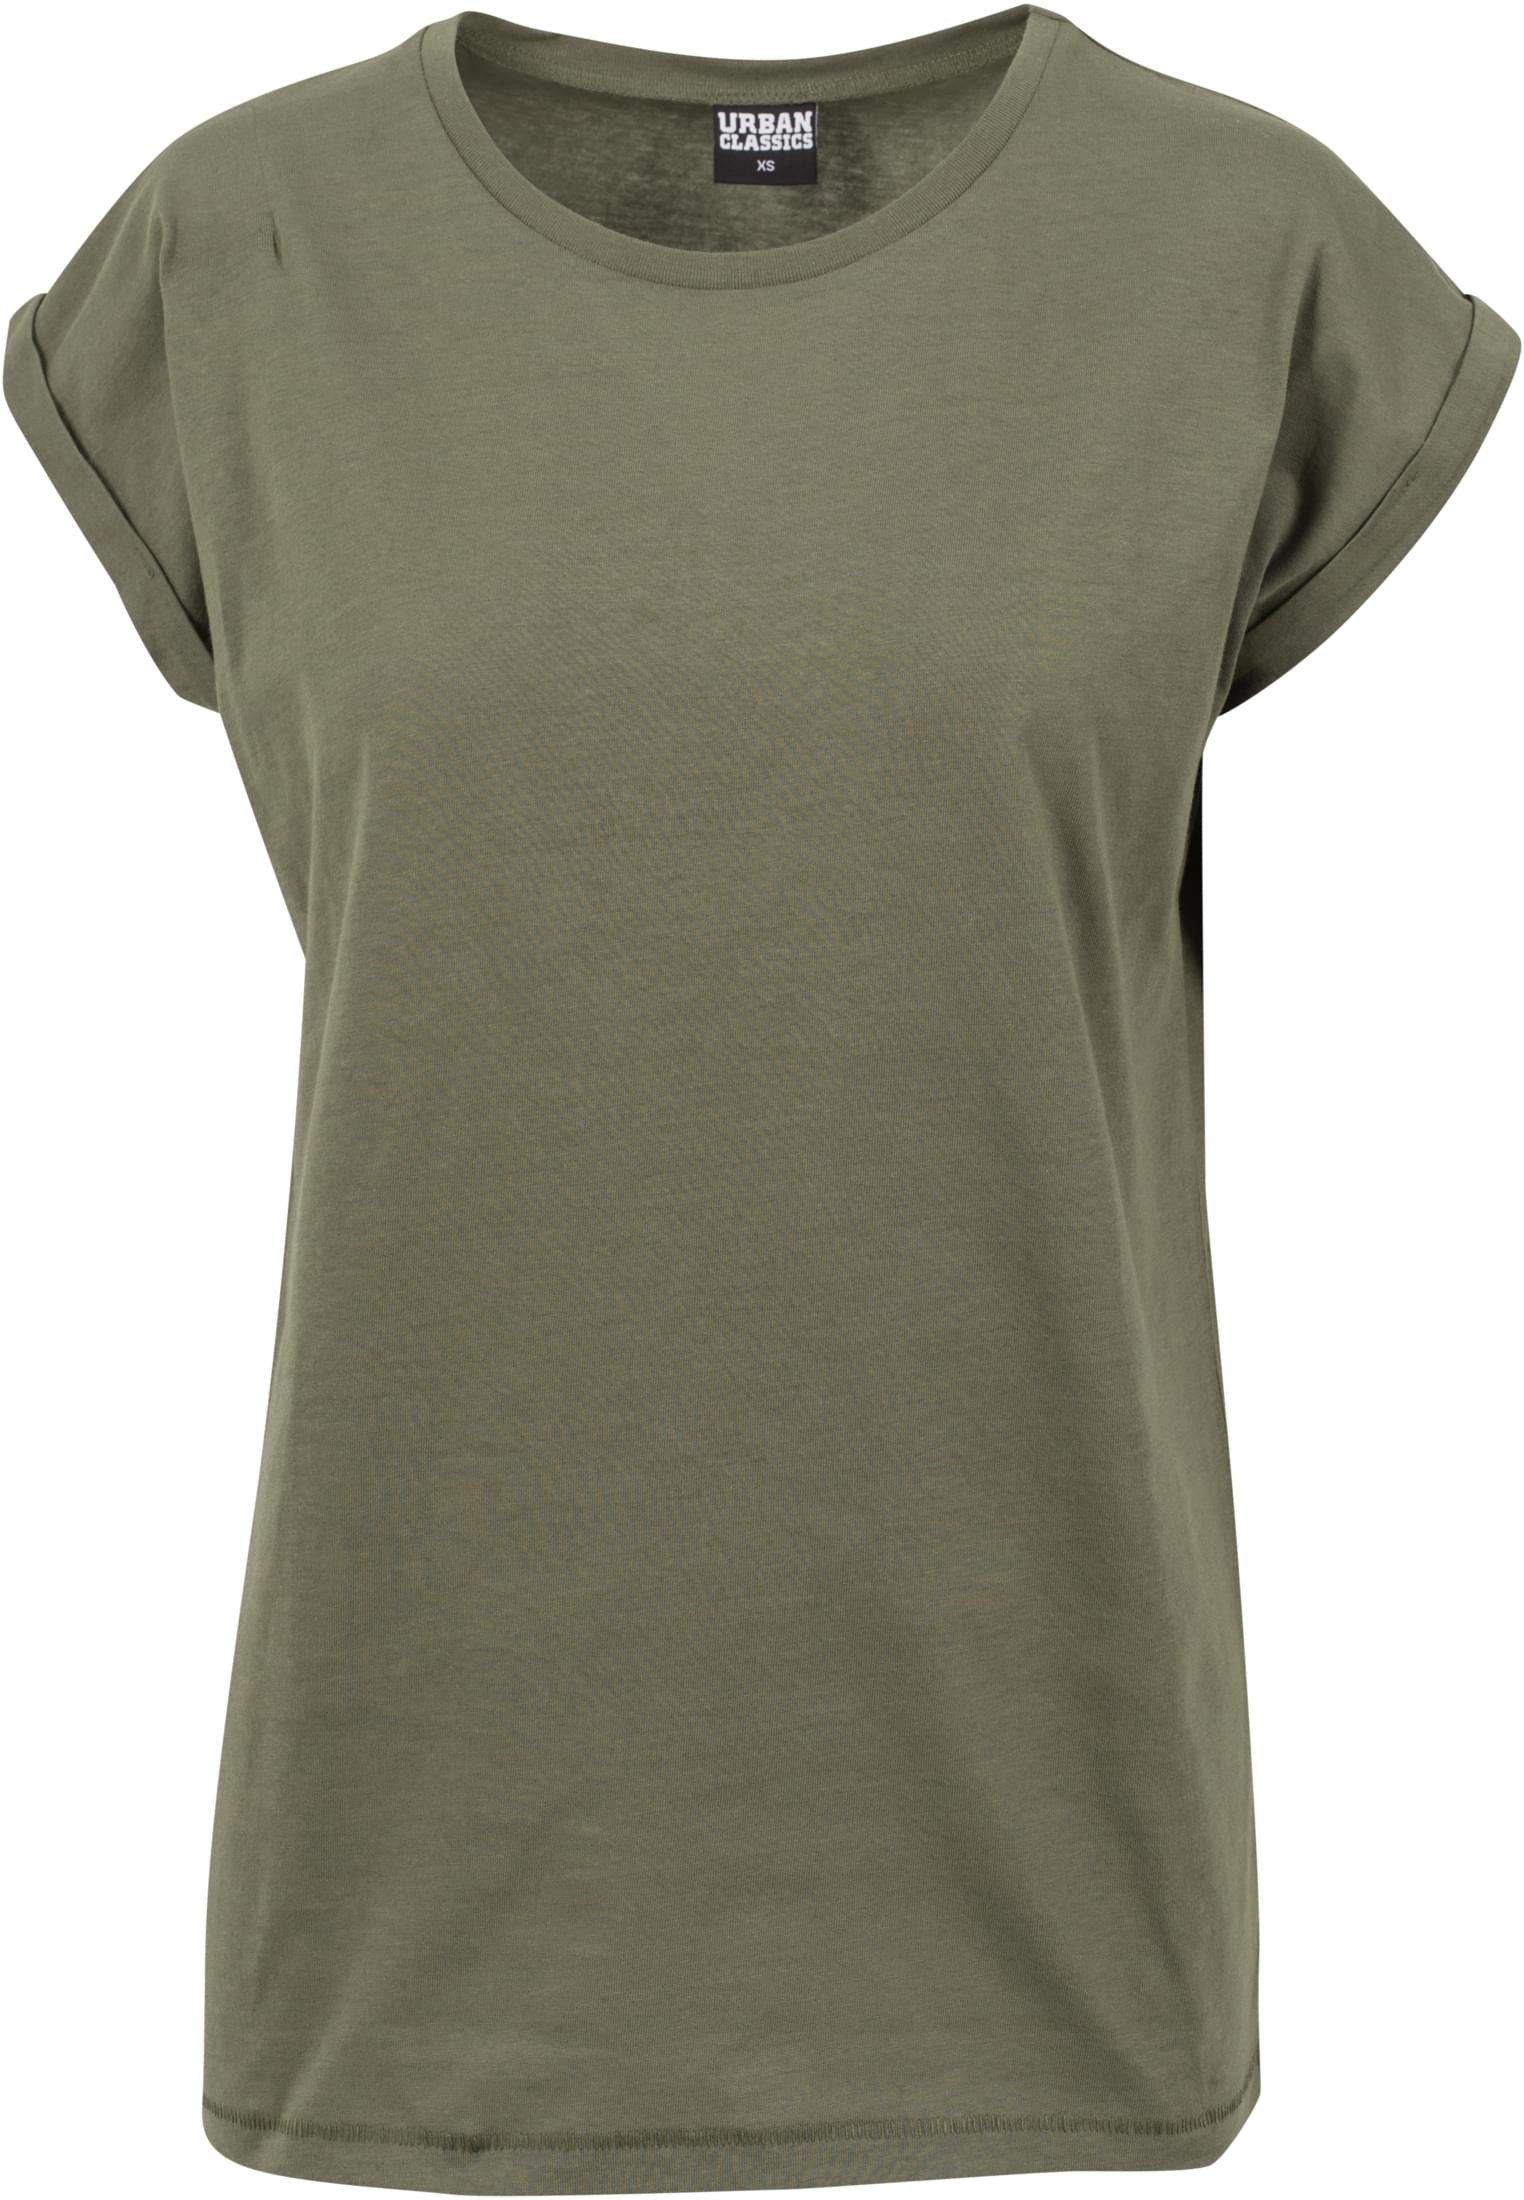 CLASSICS TB771 Extended T-Shirt olive URBAN Shoulder